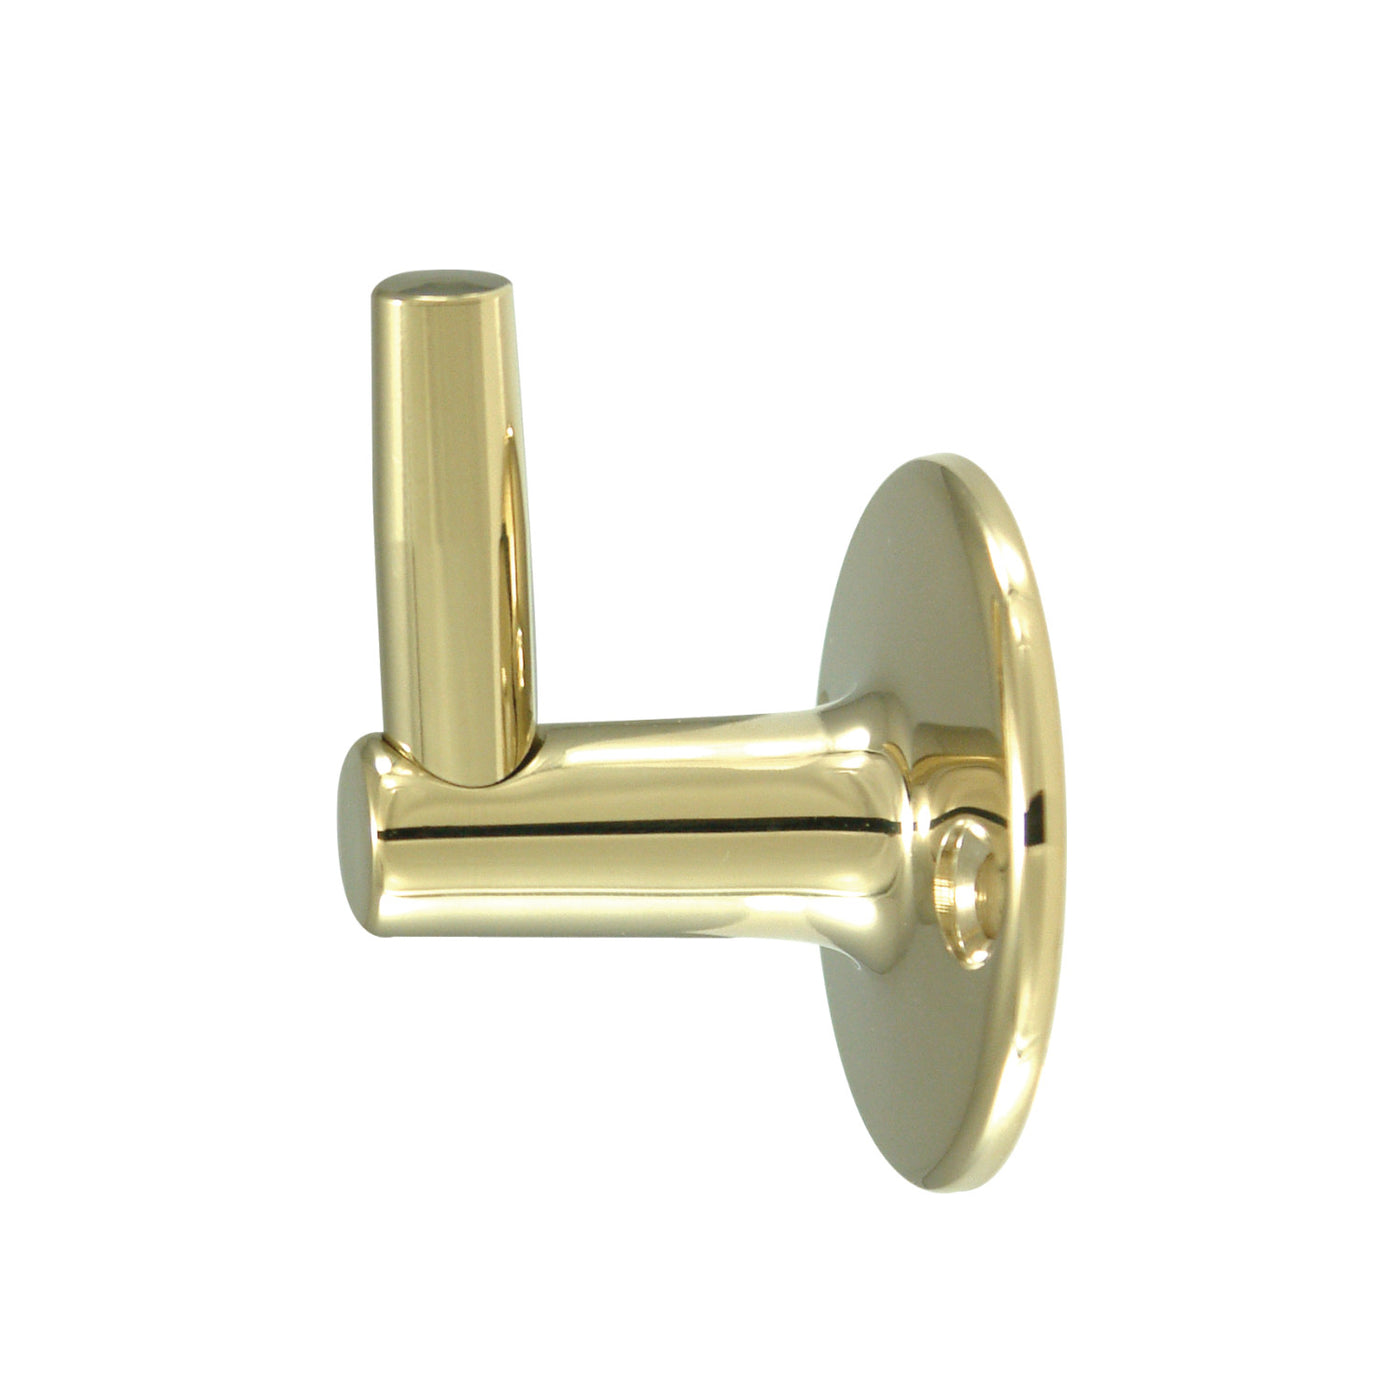 Elements of Design DK171A2 Hand Shower Pin Wall Mount Bracket, Polished Brass